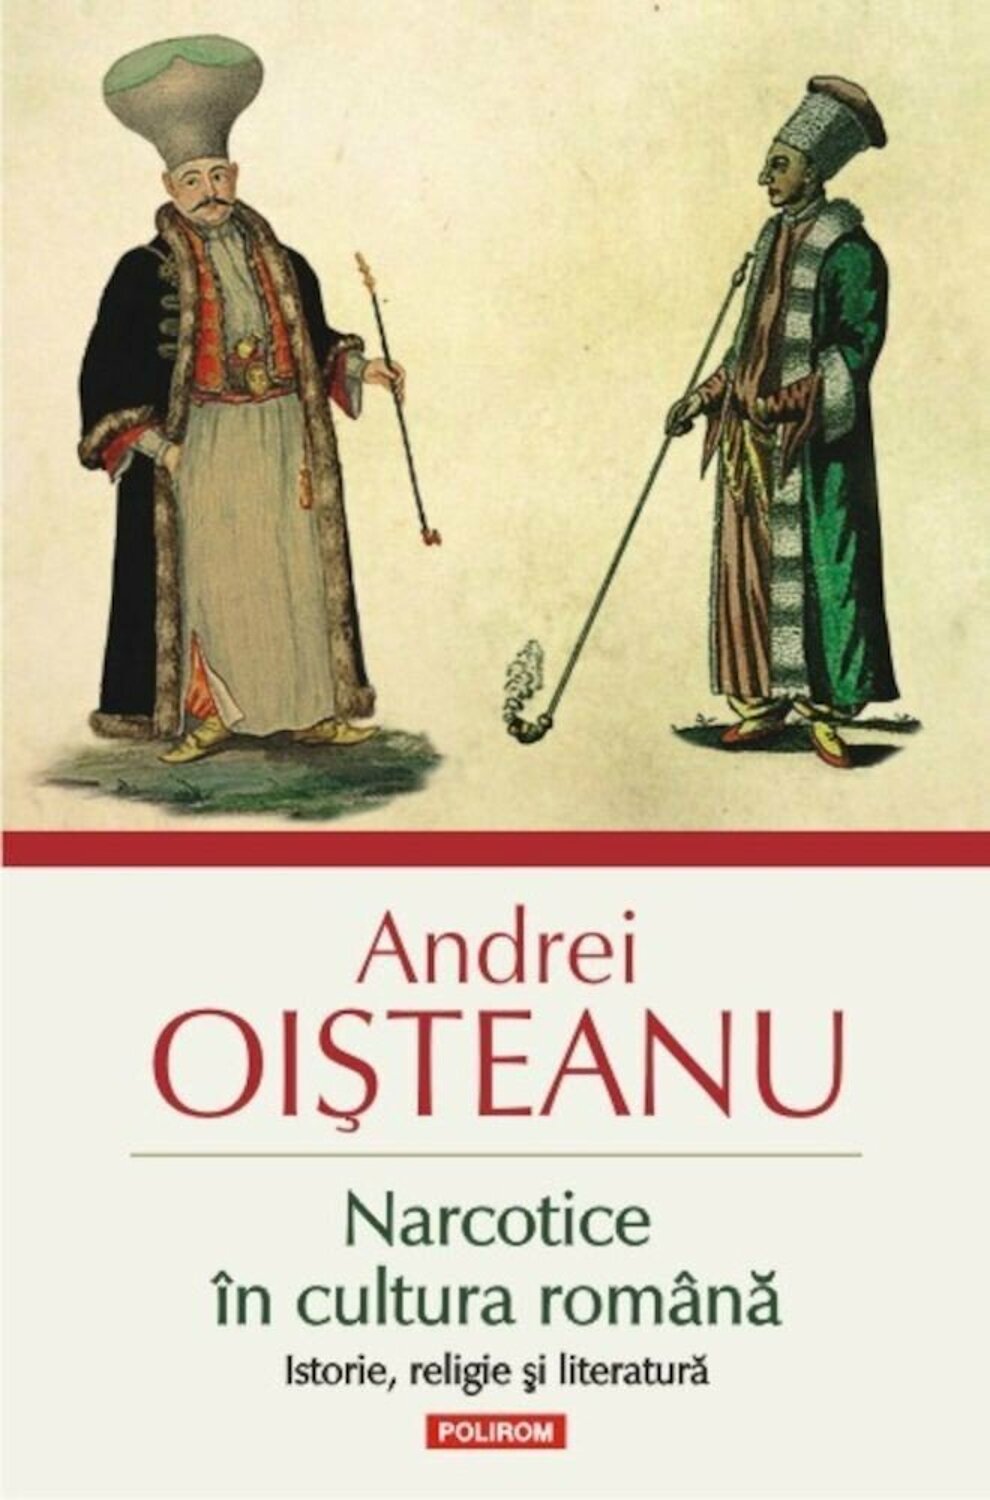 Andrei OISTEANU | Narcotice in cultura romana. Istorie, religie si cultura